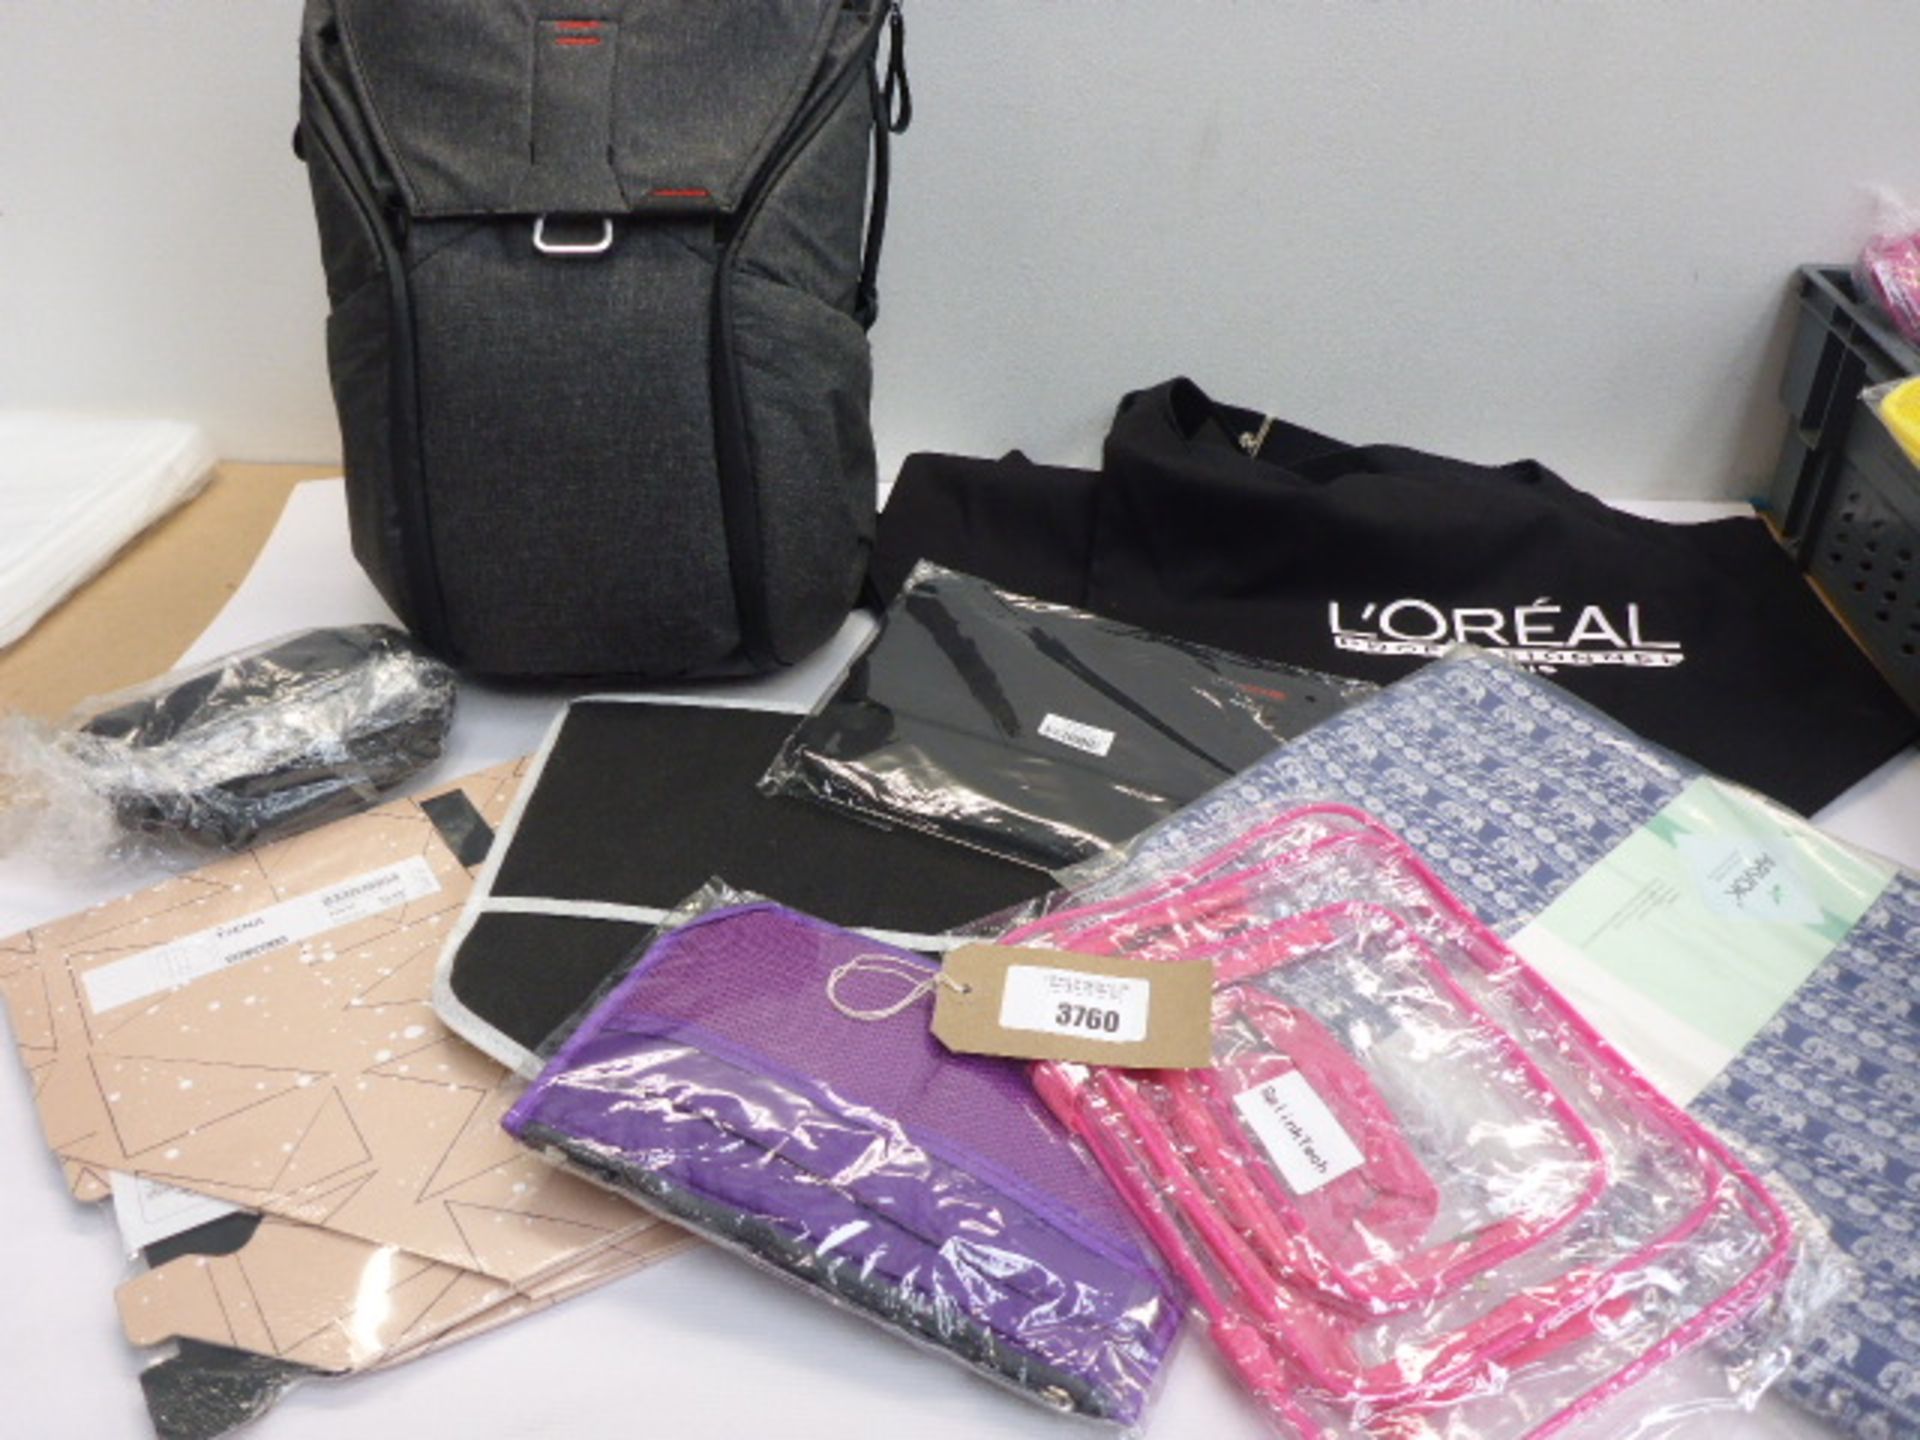 Peak Design 20L rucksack, iPad sleeves, L'Oreal shopping bags etc